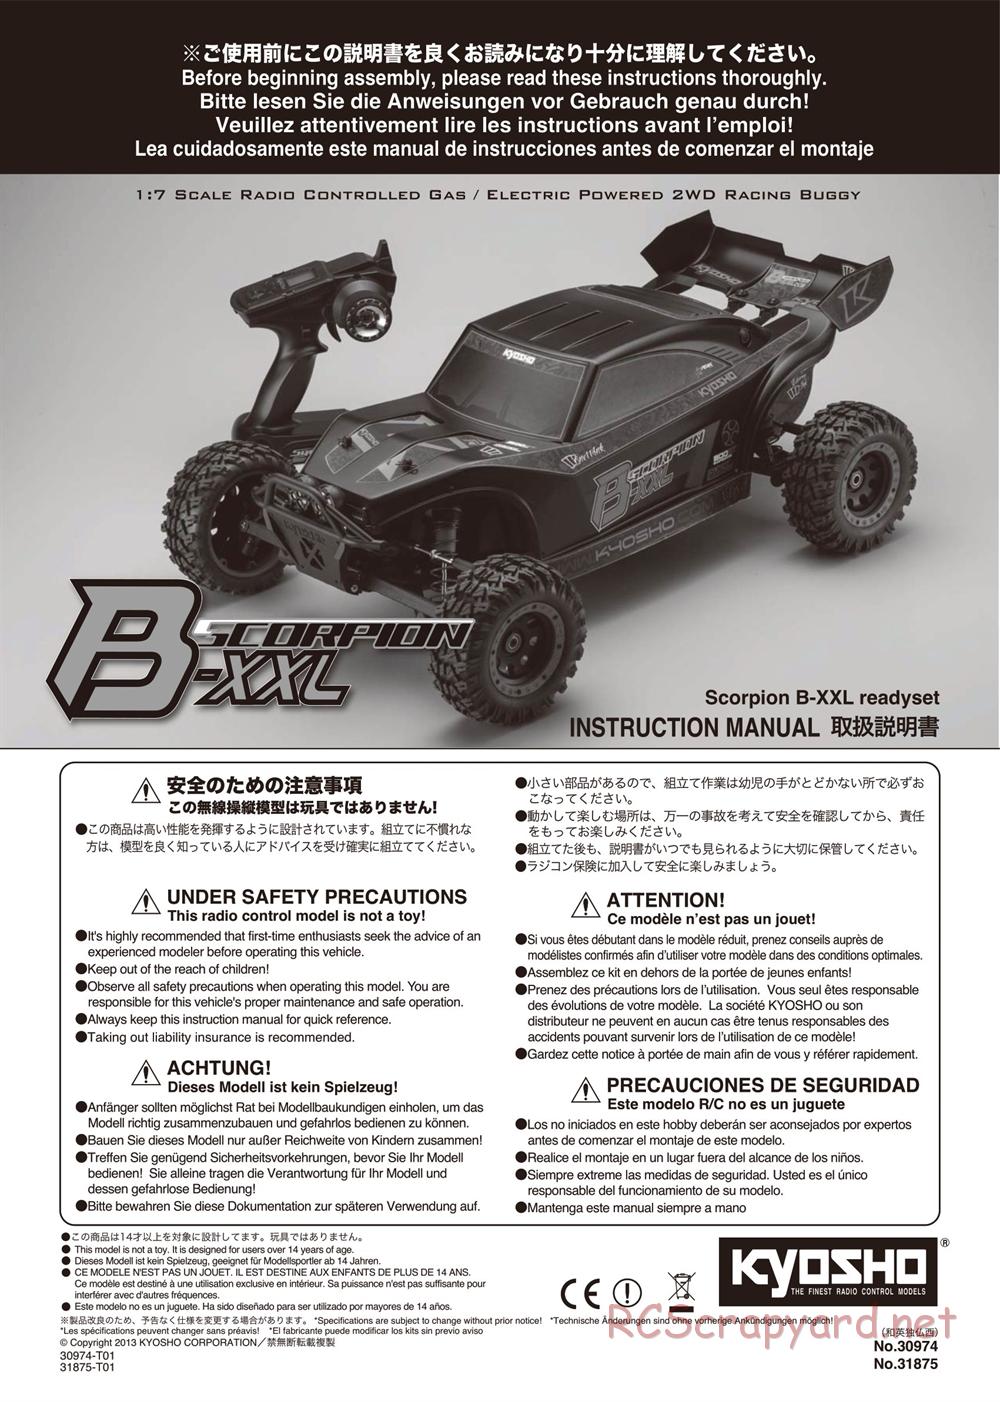 Kyosho - Scorpion B-XXL GP - Manual - Page 1